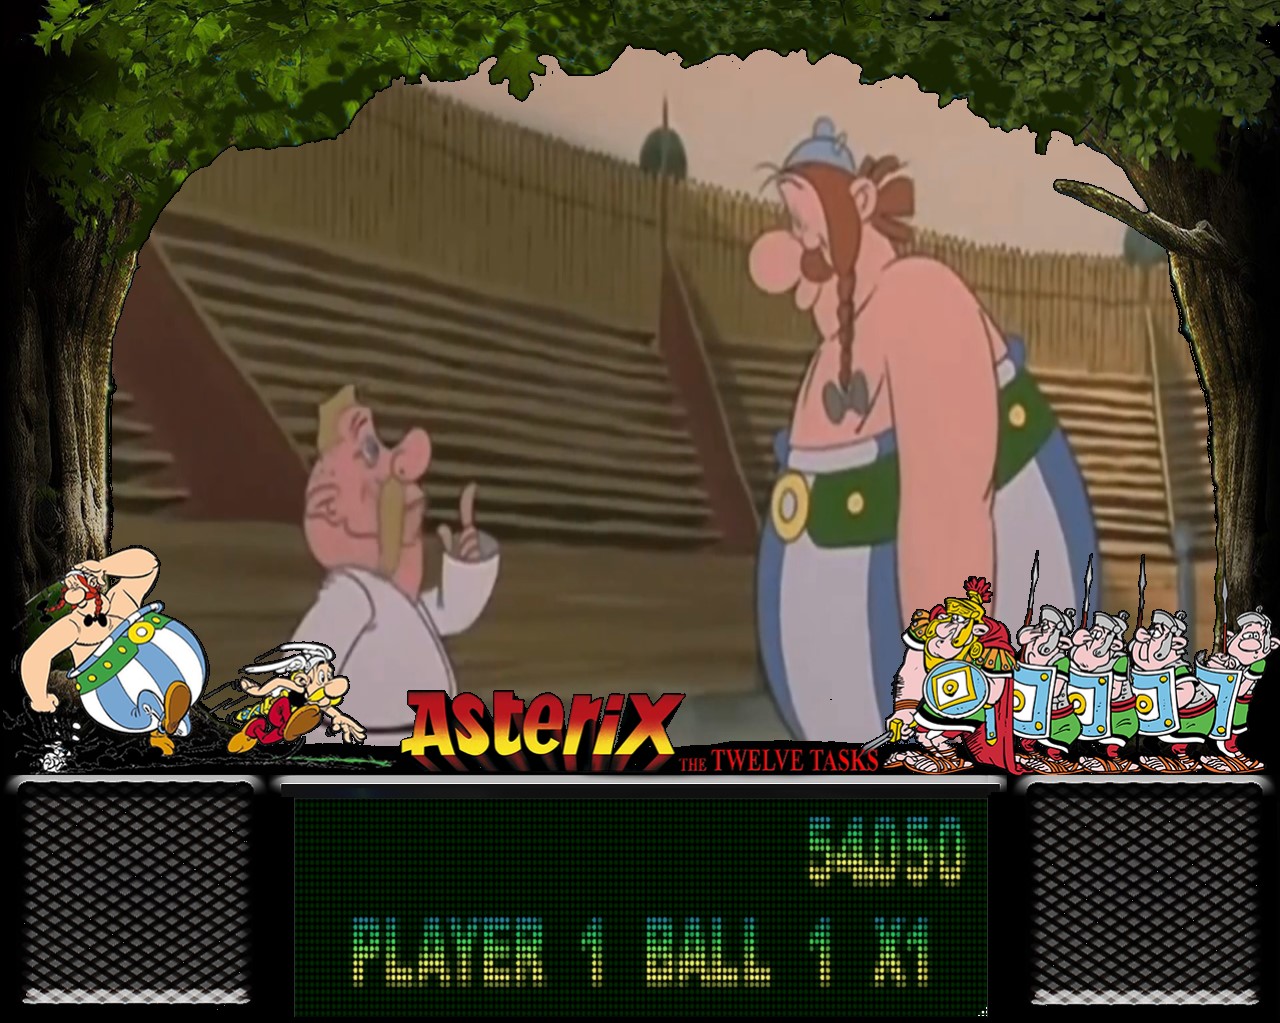 PUP-PACK Asterix the Twelve Tasks (Original 2022)